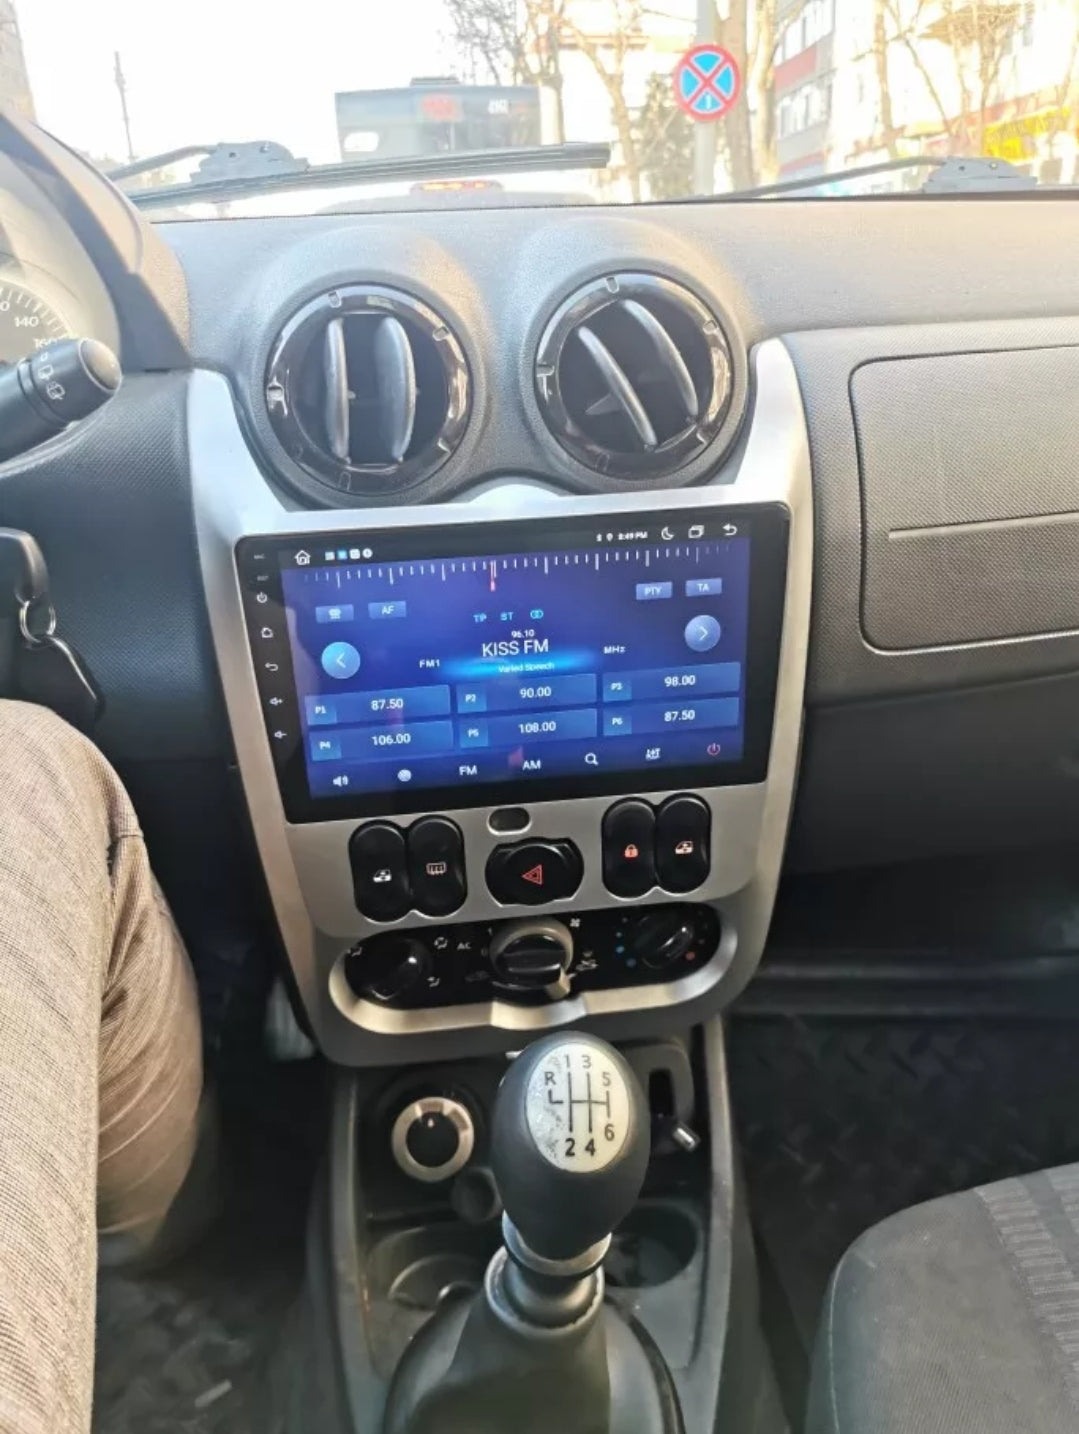 💥NEW Arrival💥HD IPS Car Radio for Dacia Sandero Duster Renault